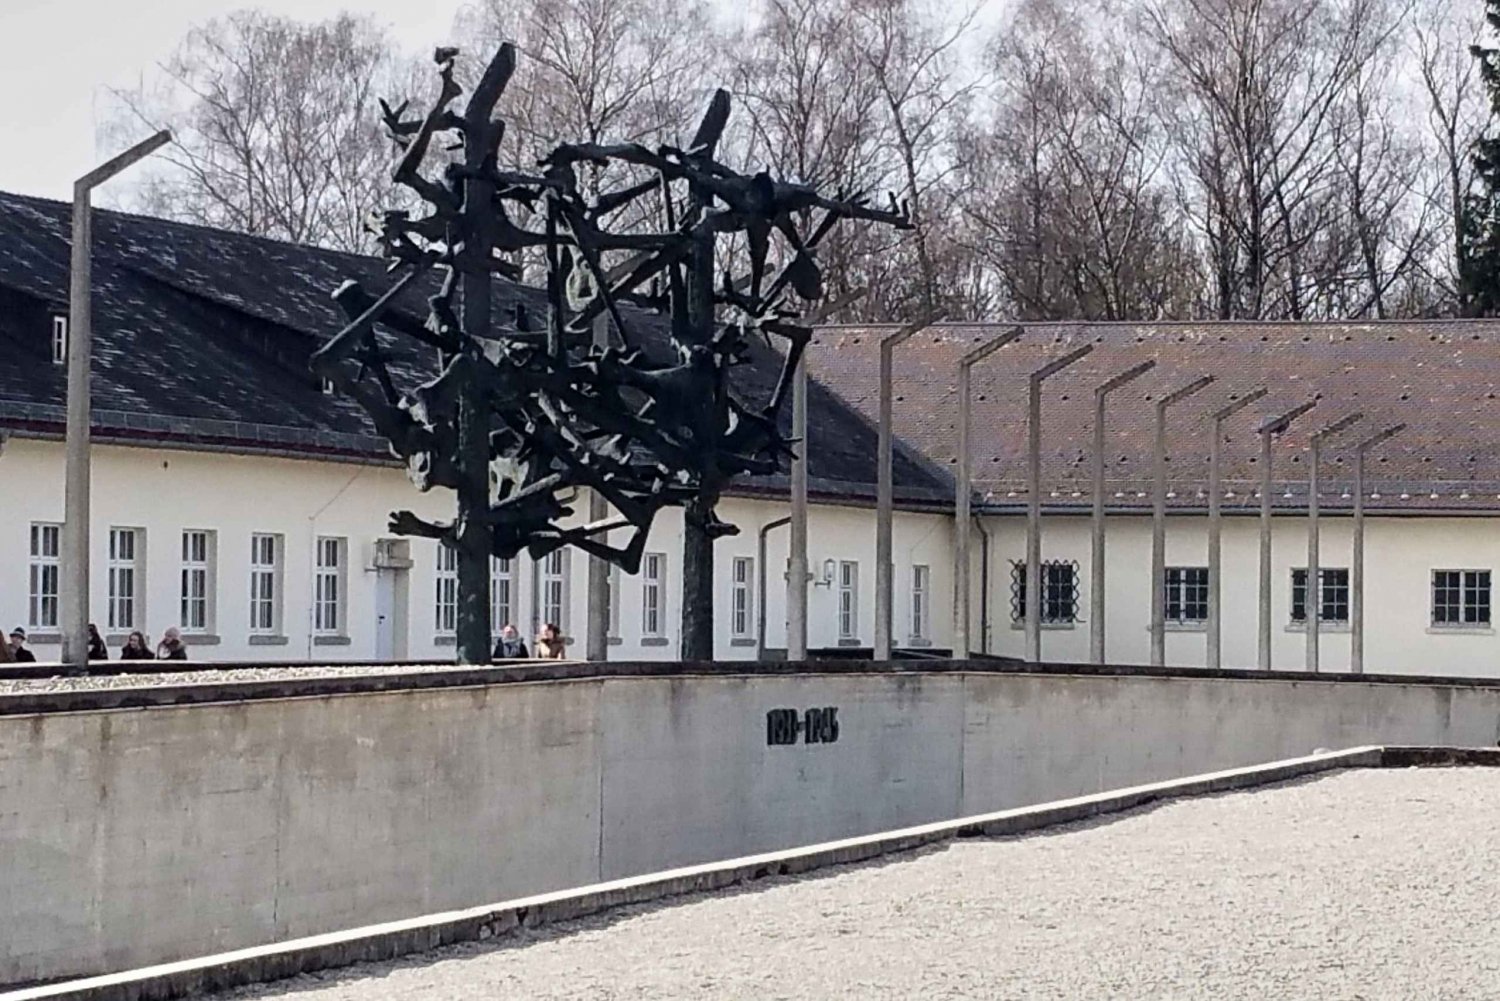 Discover-the-Dachau-Concentration-Camp-Memorial-Site